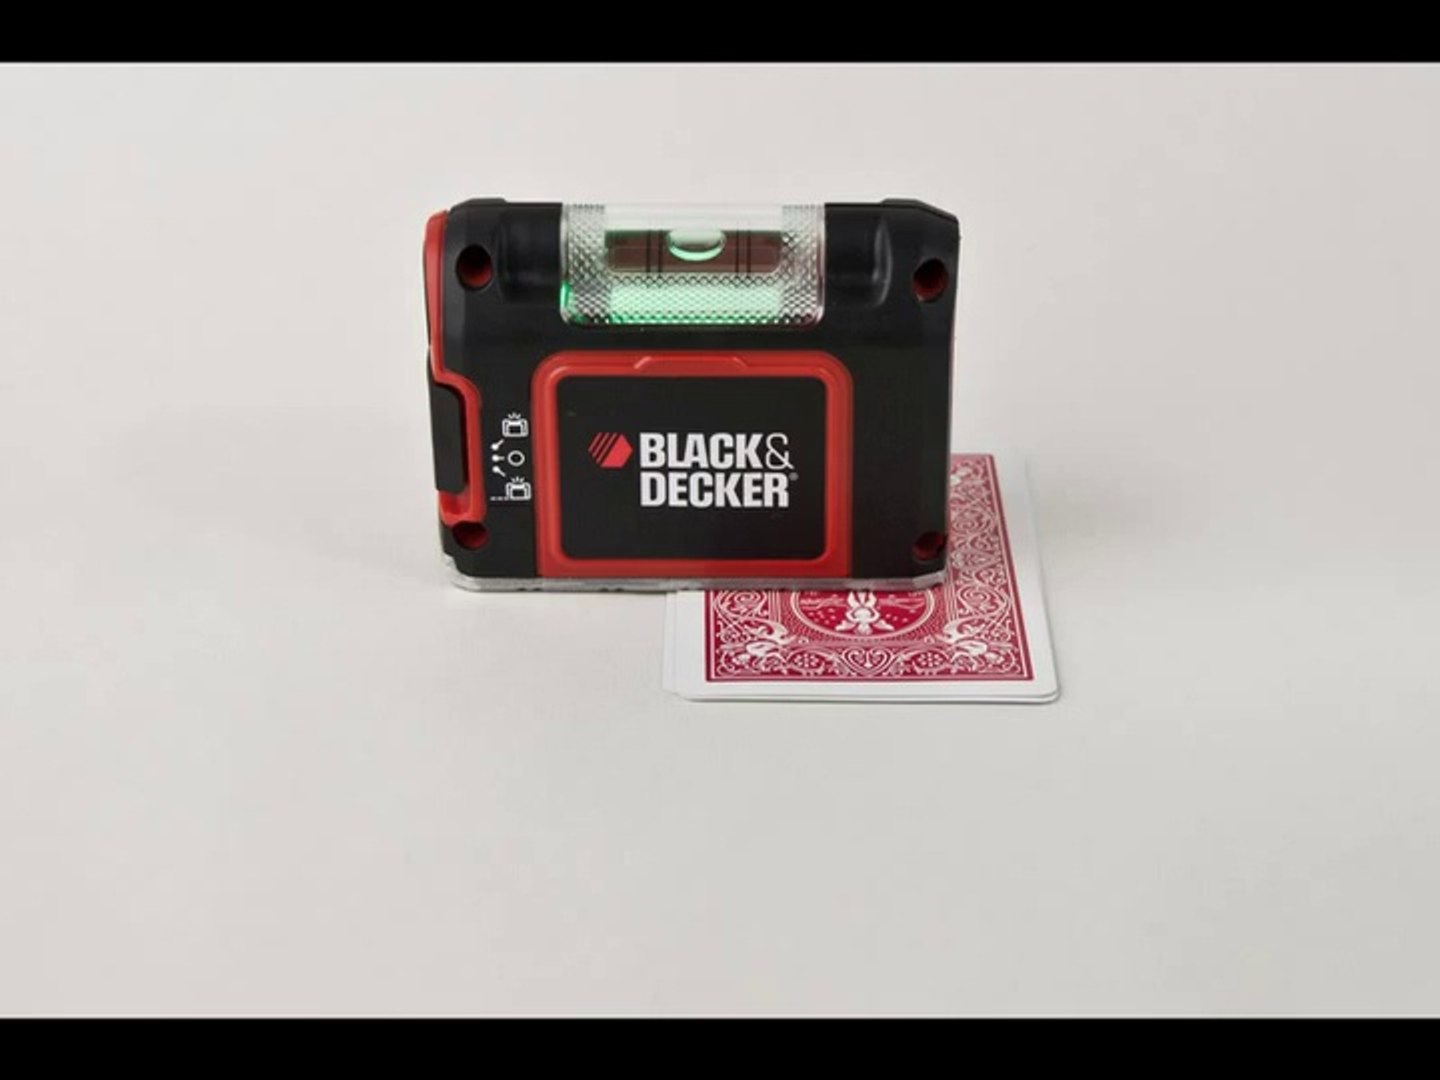 Black & Decker BDL100AV All-In-One SureGrip Laser Level Review